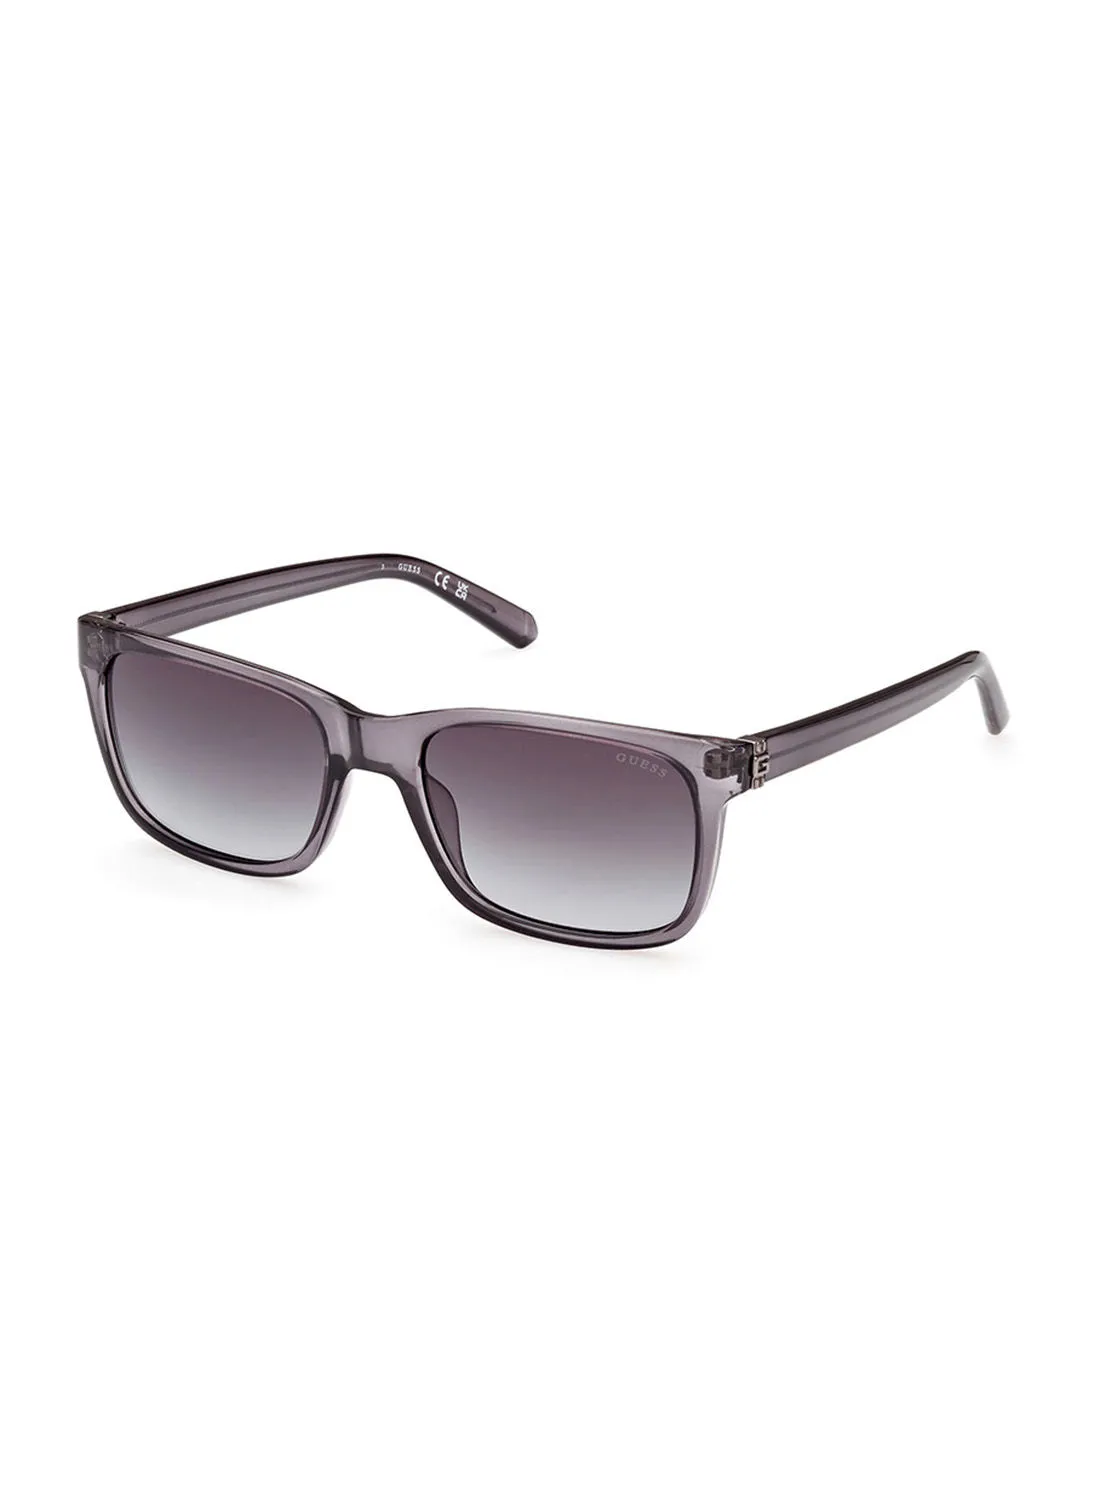 GUESS Sunglasses For Men GU0006620B55